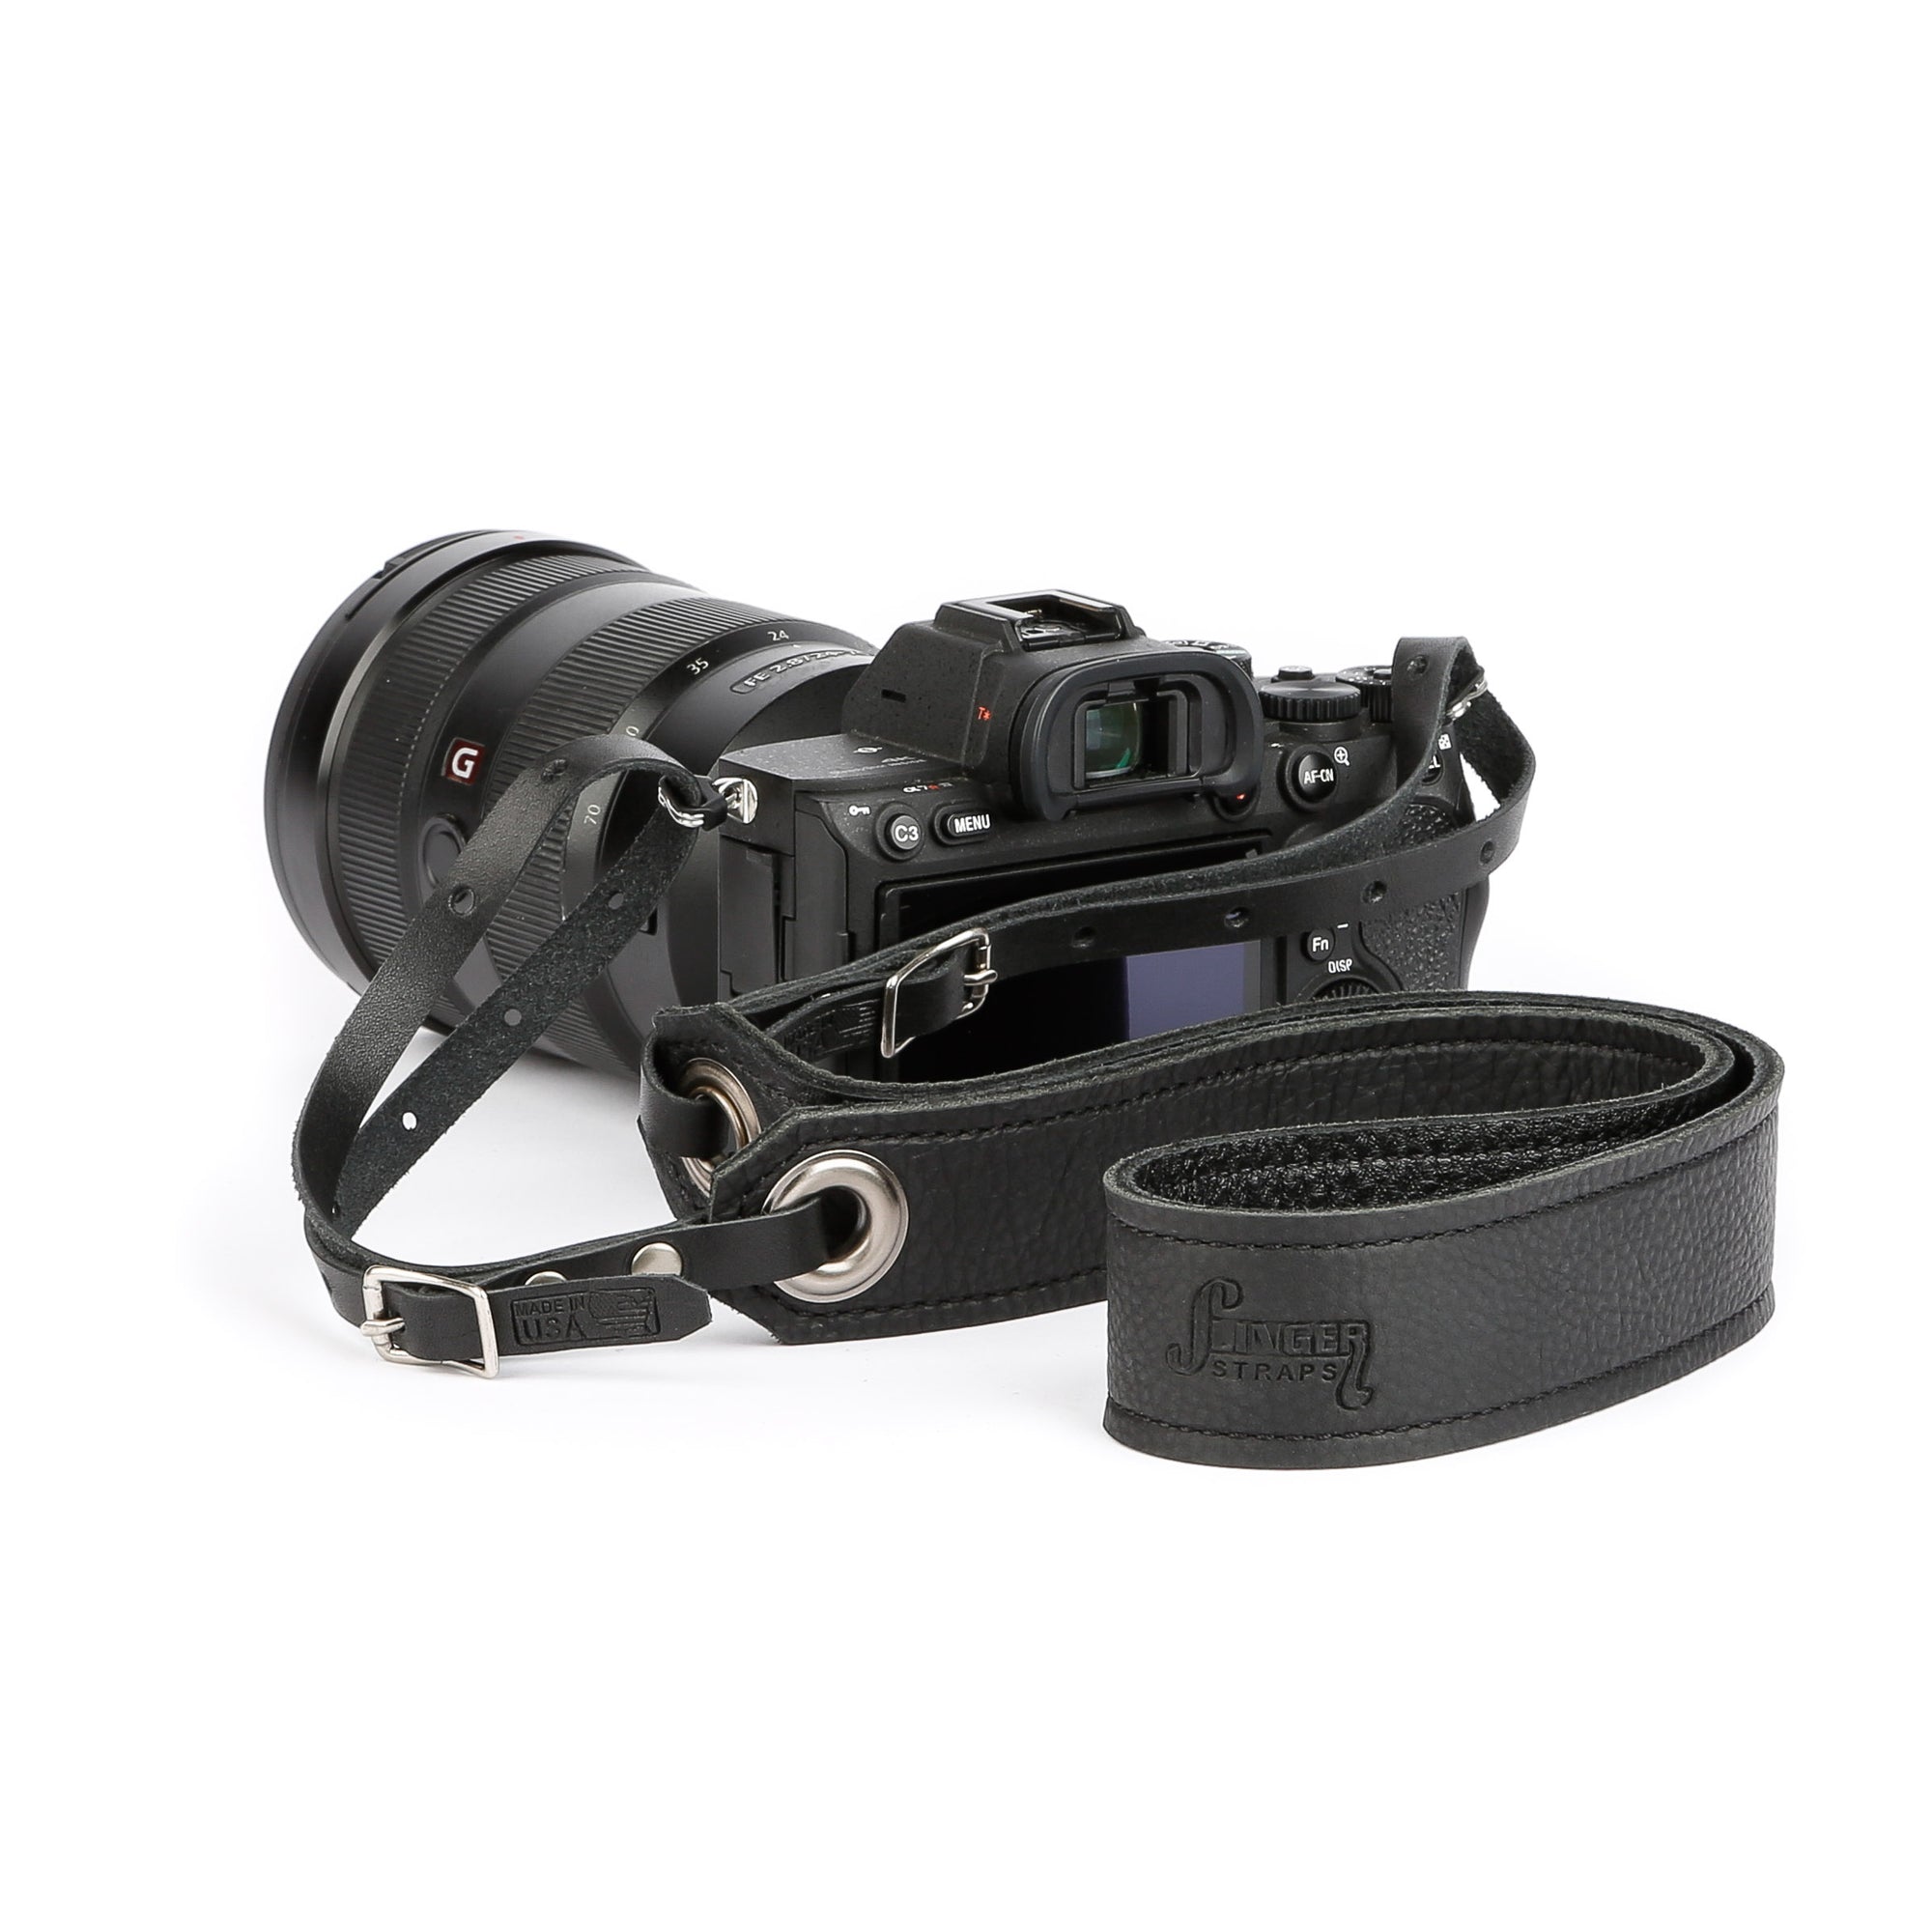 soft black leather camera strap on Sony camera with black leather end straps and black grommets